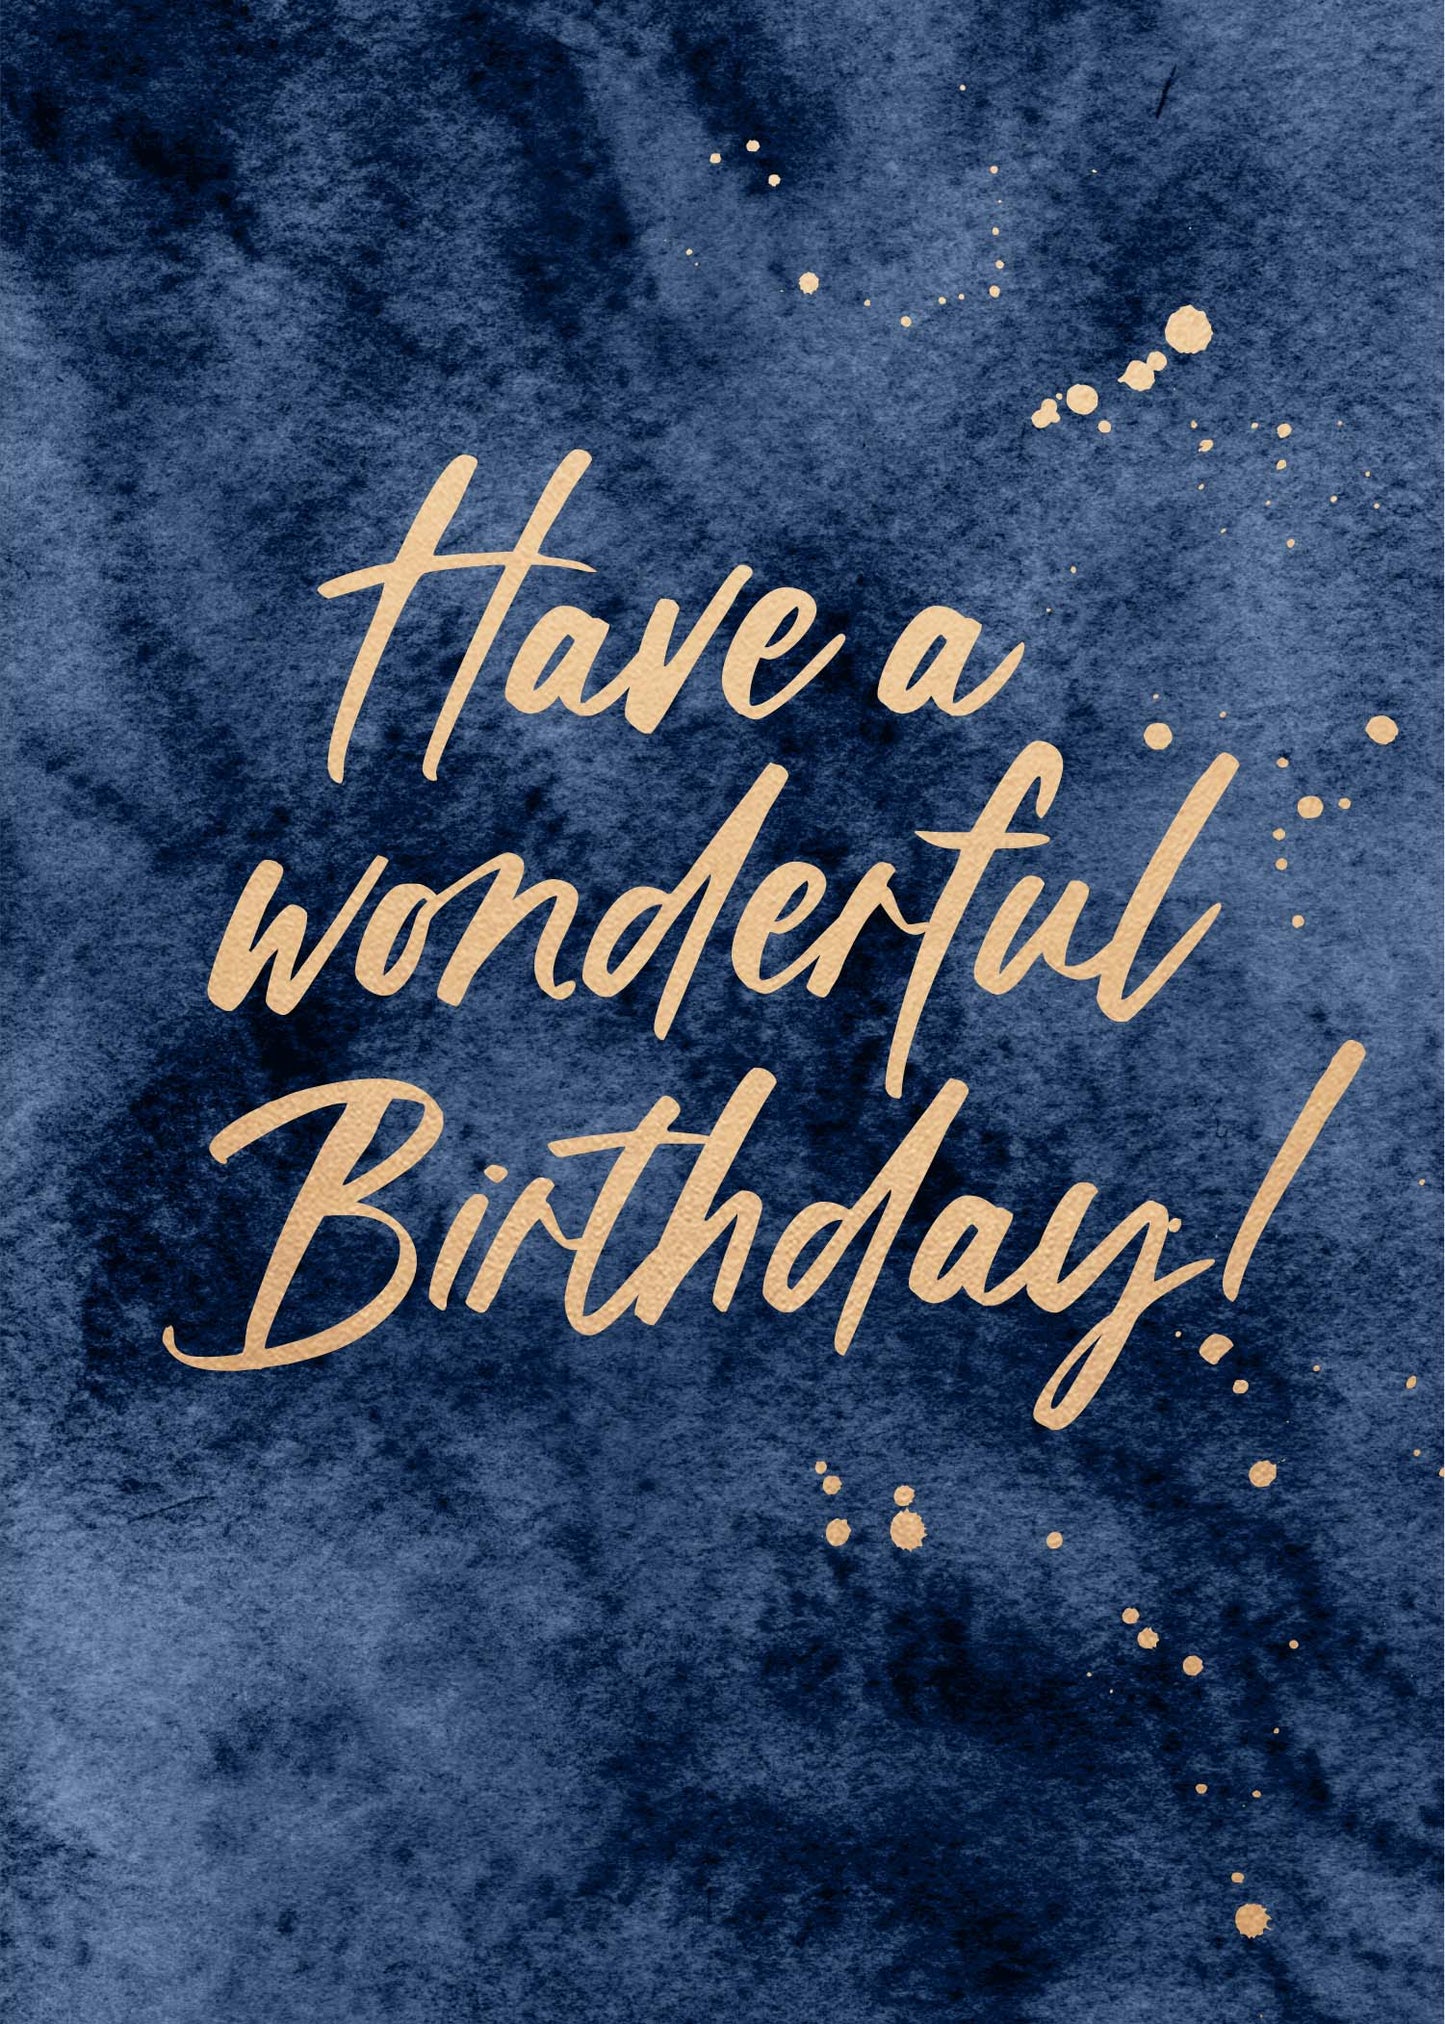 Greeting Card Awash - Wonderful Birthday